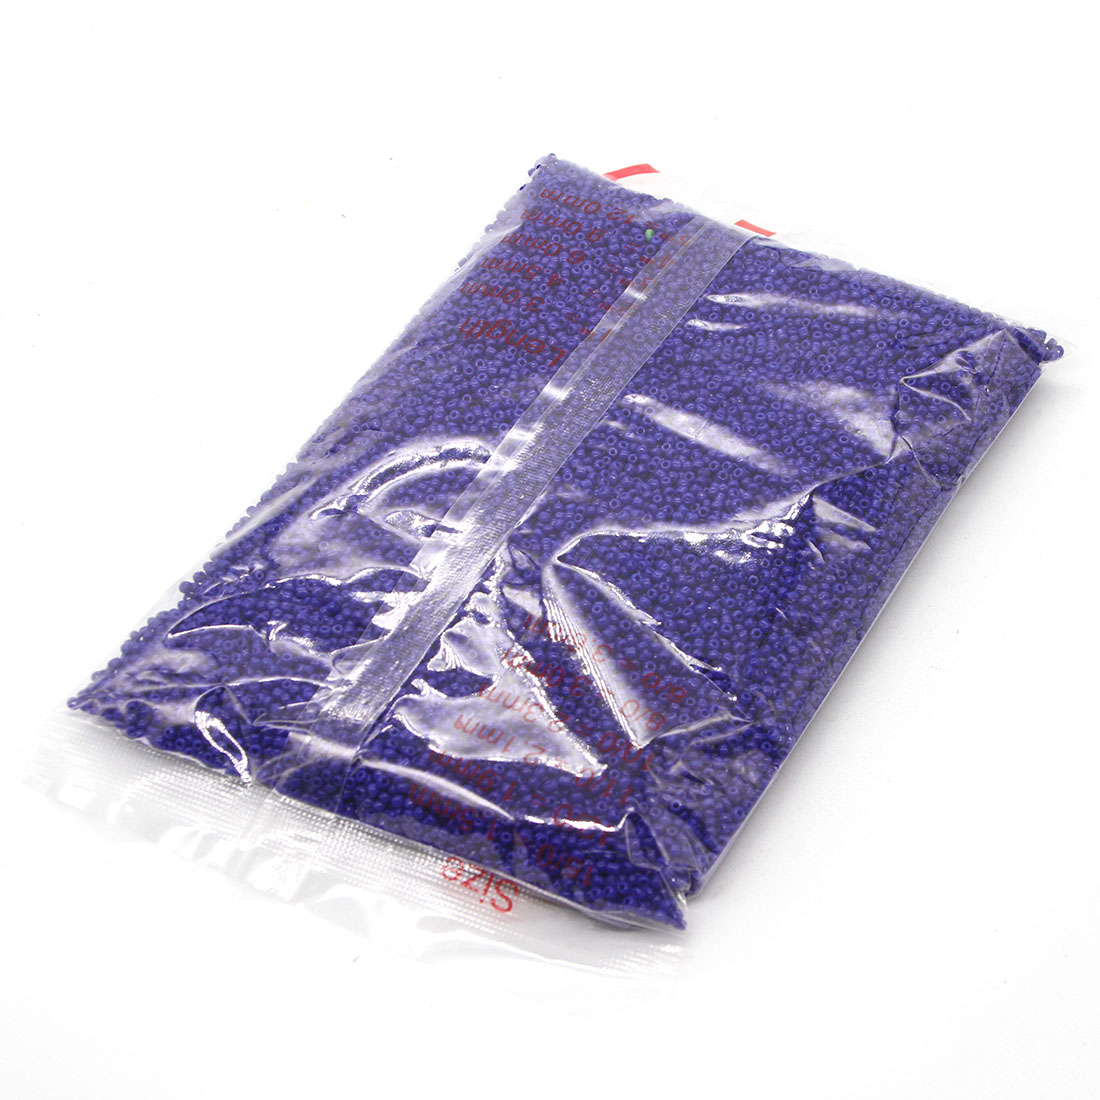 Deep purple 3mm 10,000 packs